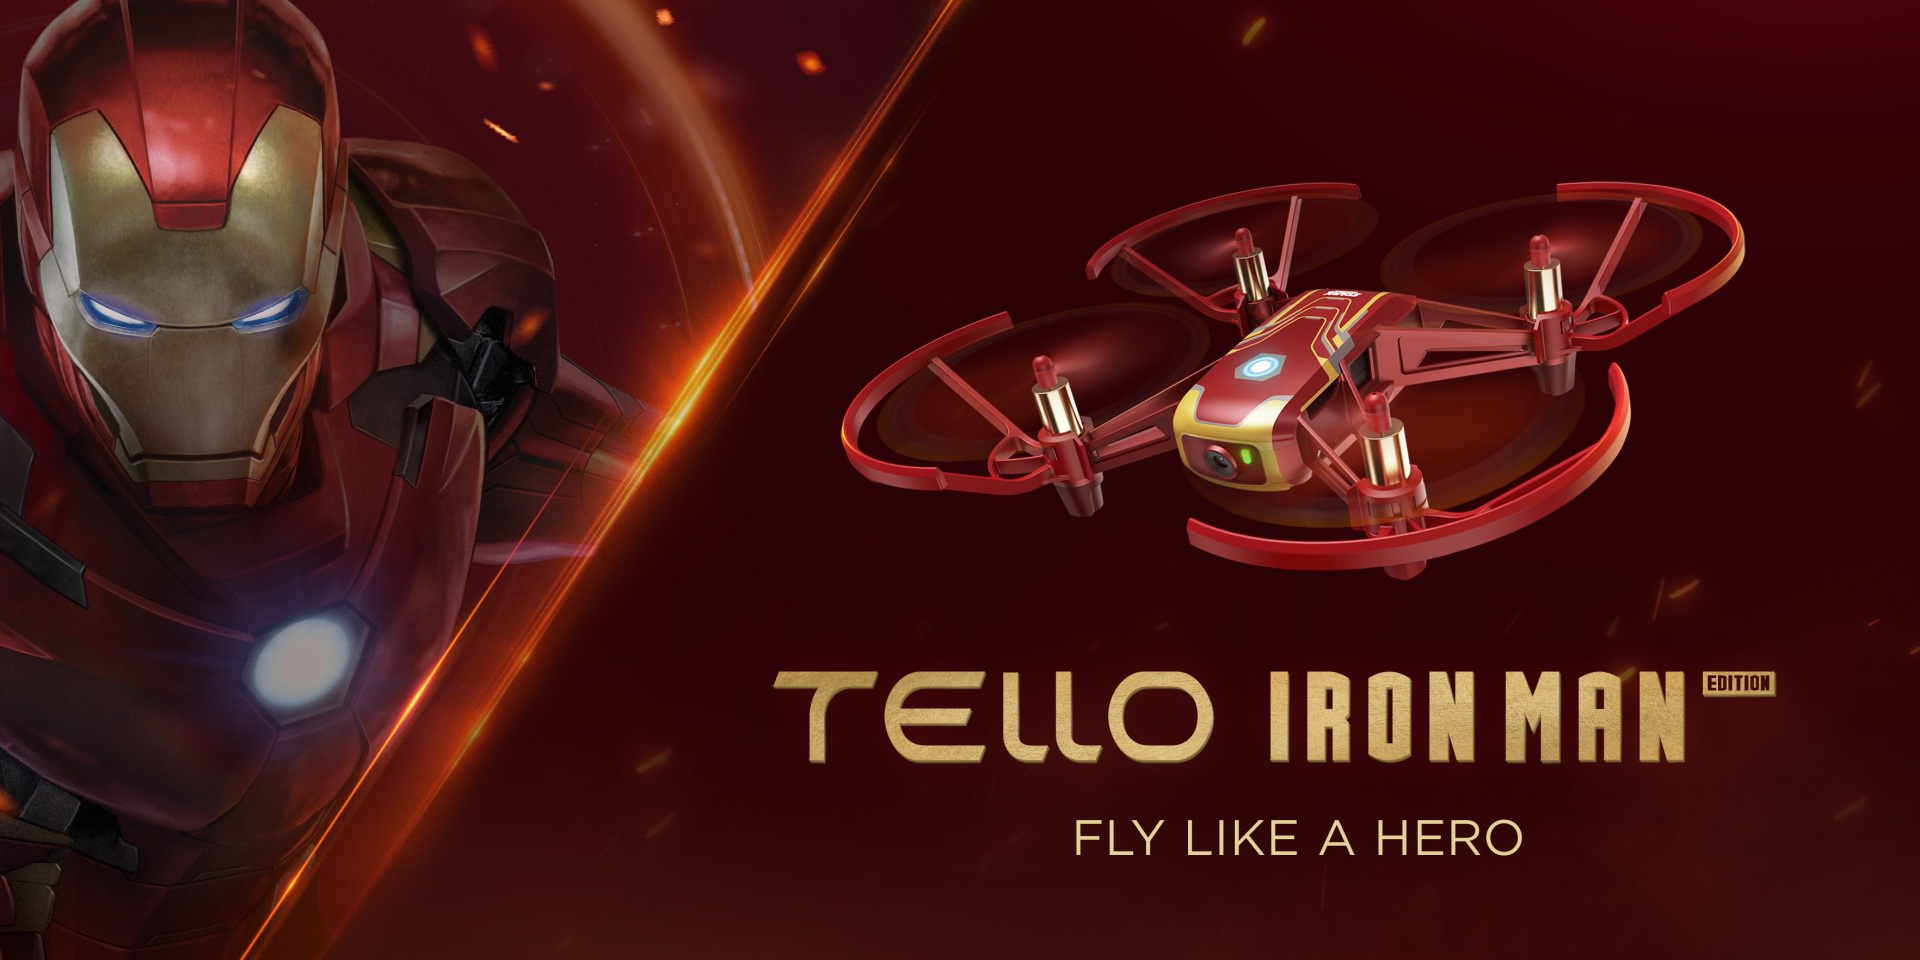 DJI / Ryze introduces the Tello Iron Man Edition